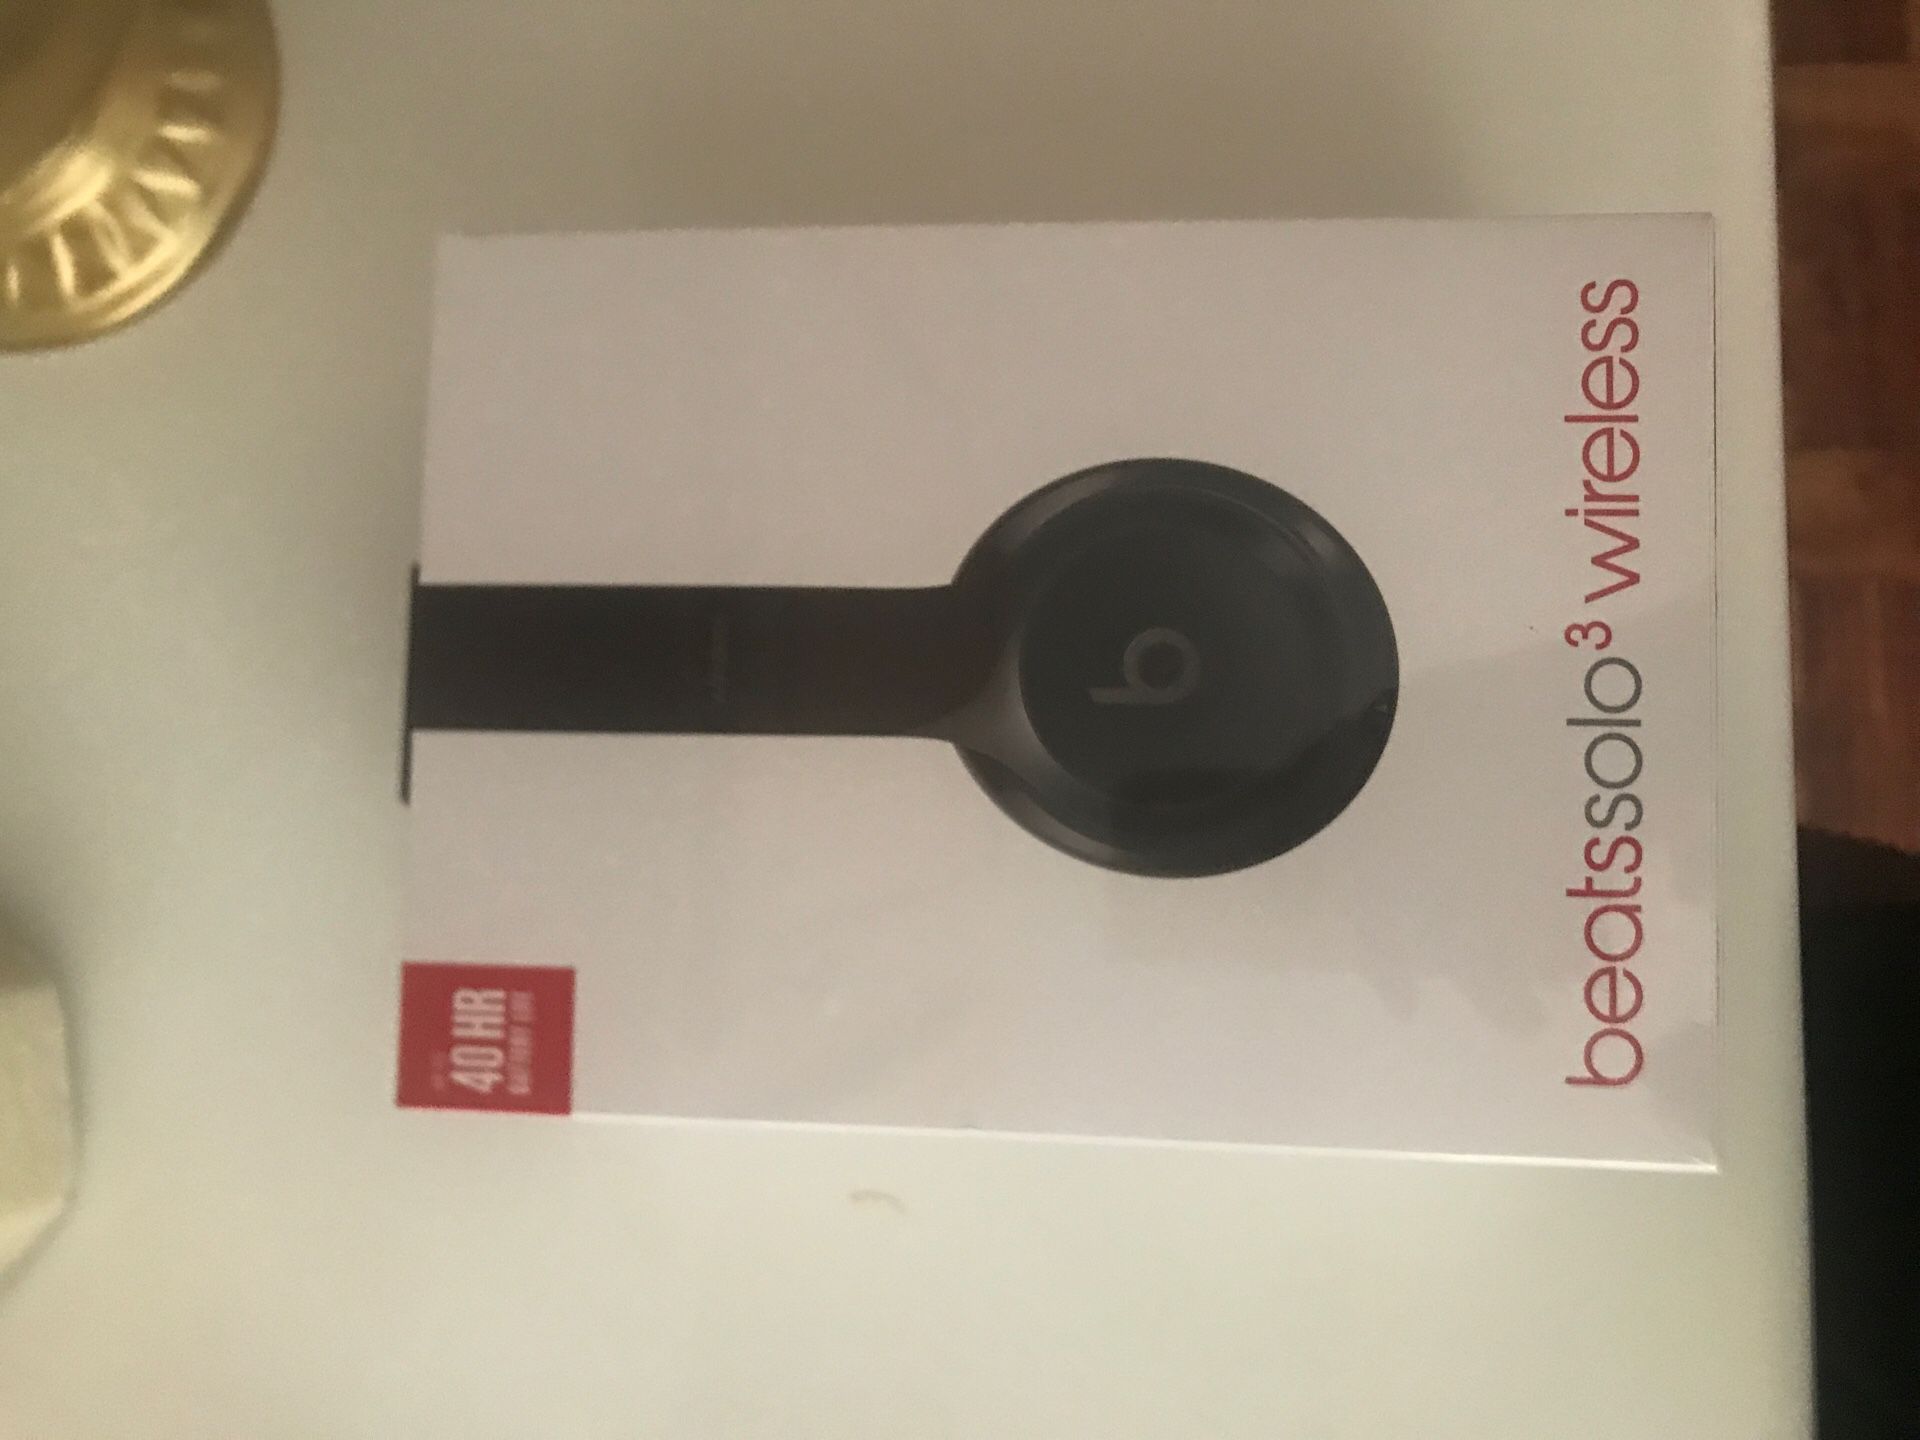 Brand new Beats Solo 3 Wireless headphones